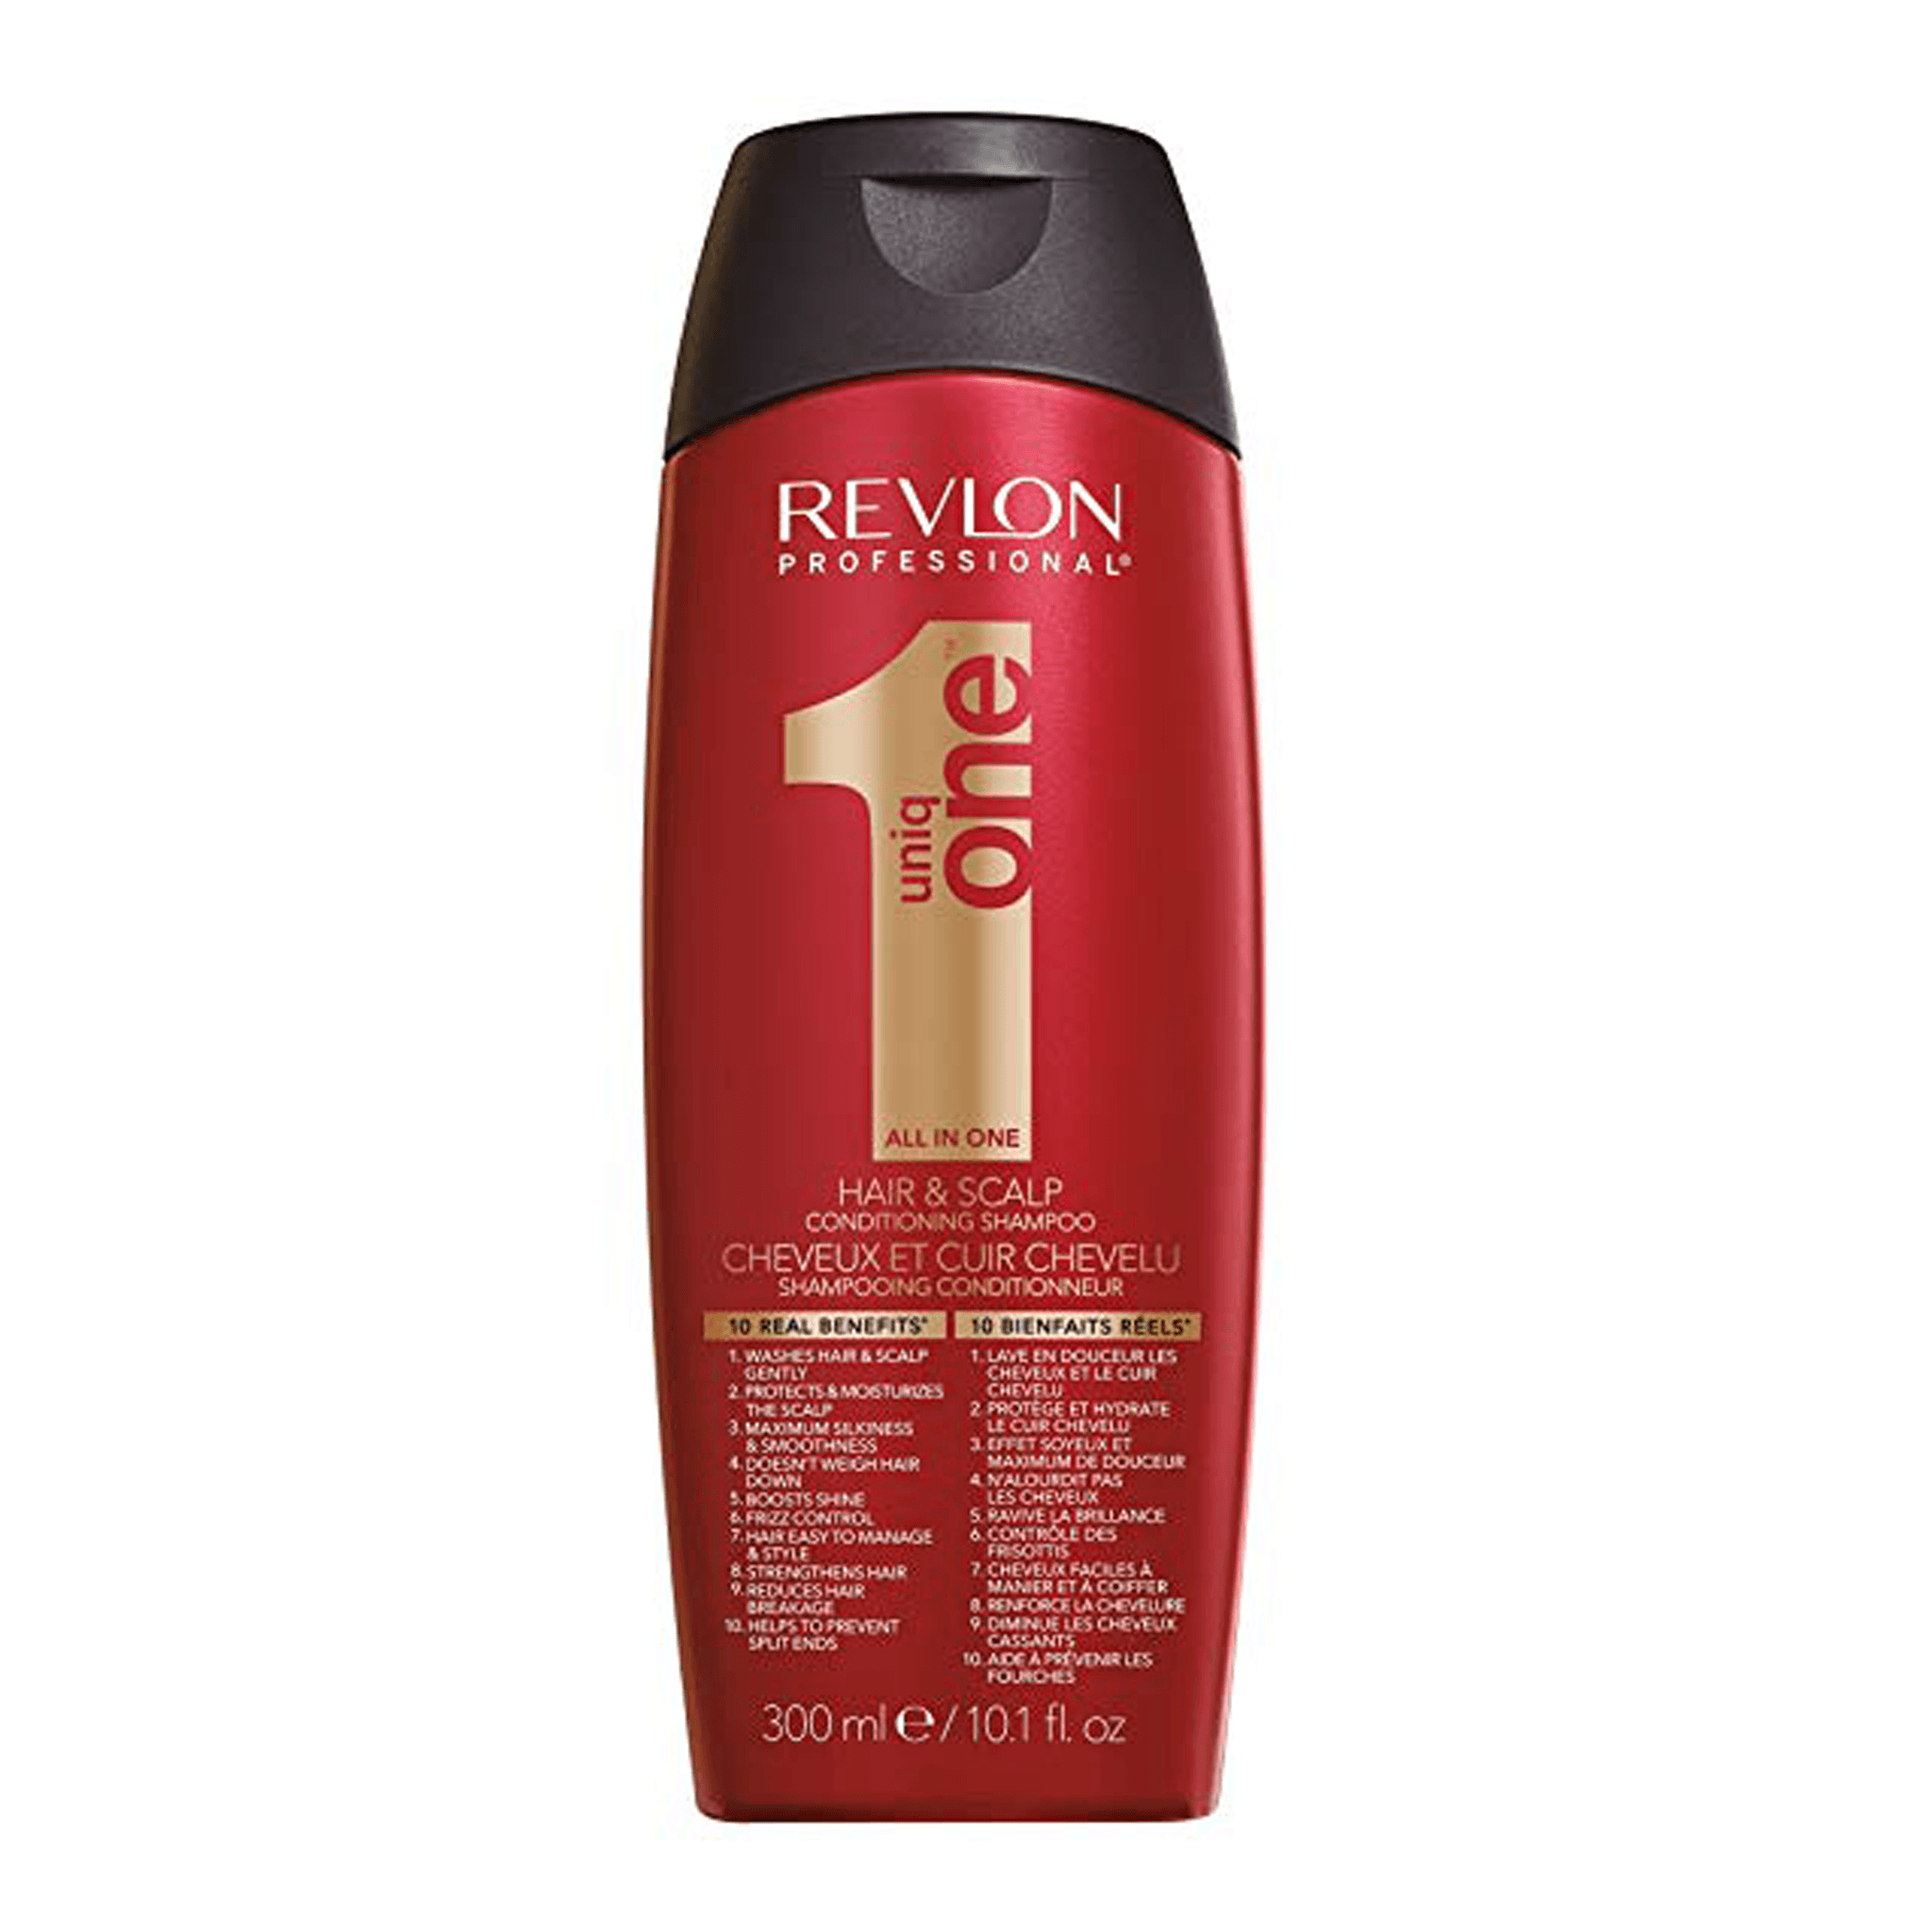 Revlon profesionnel. Shampoing/Revitalisant Uniq One - 300 ml - Concept C. Shop